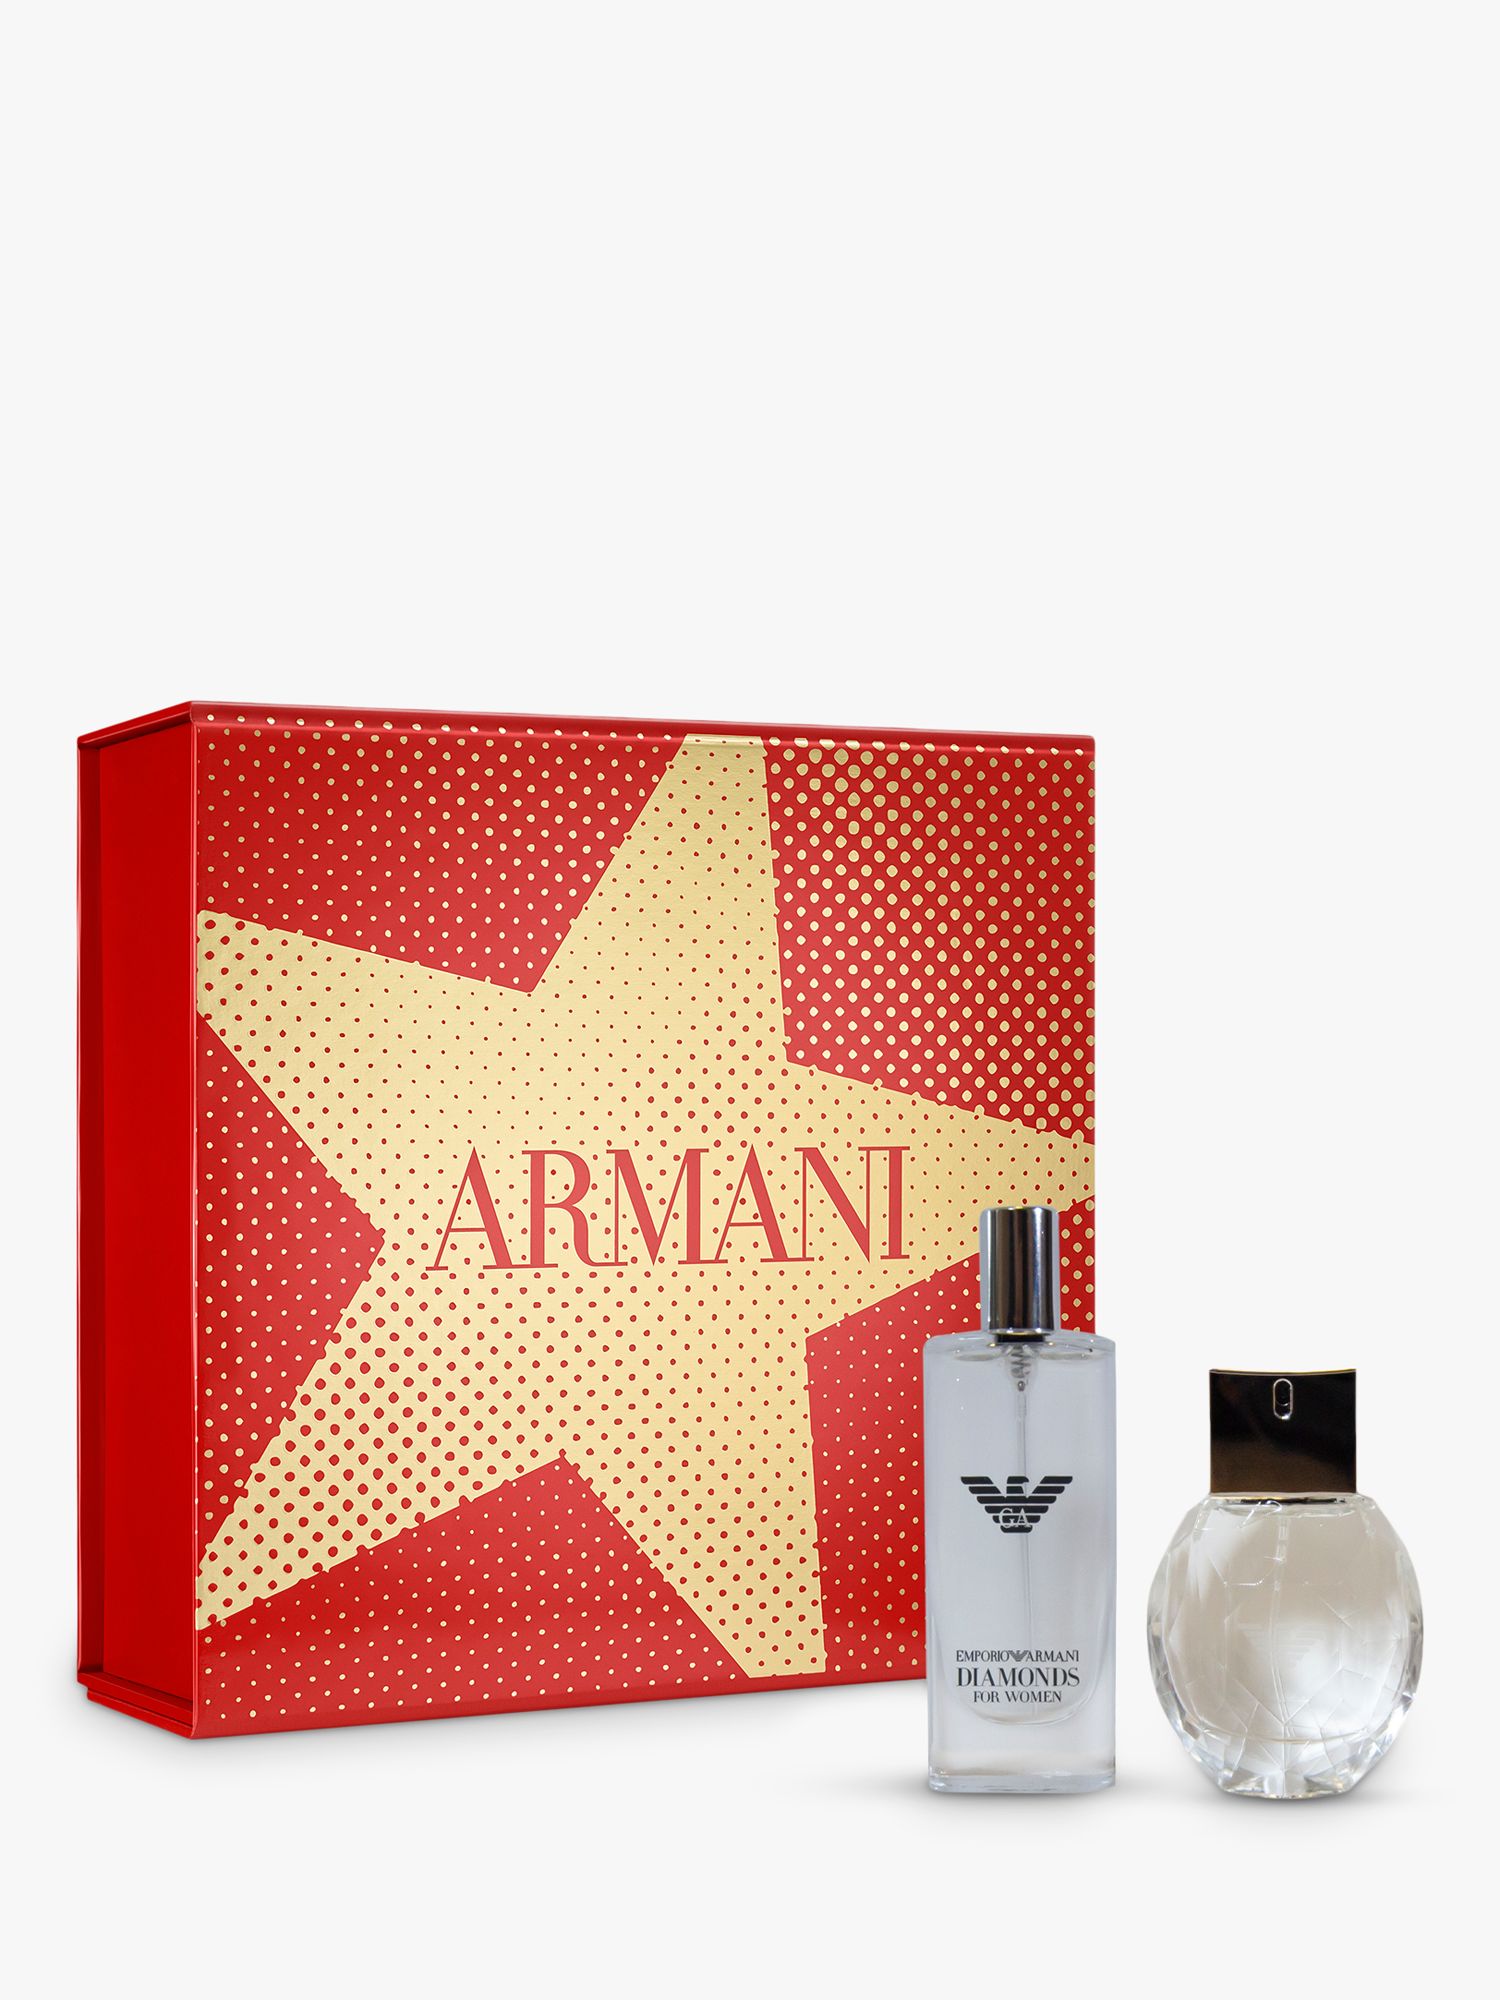 Emporio Armani Diamonds Eau de Parfum 